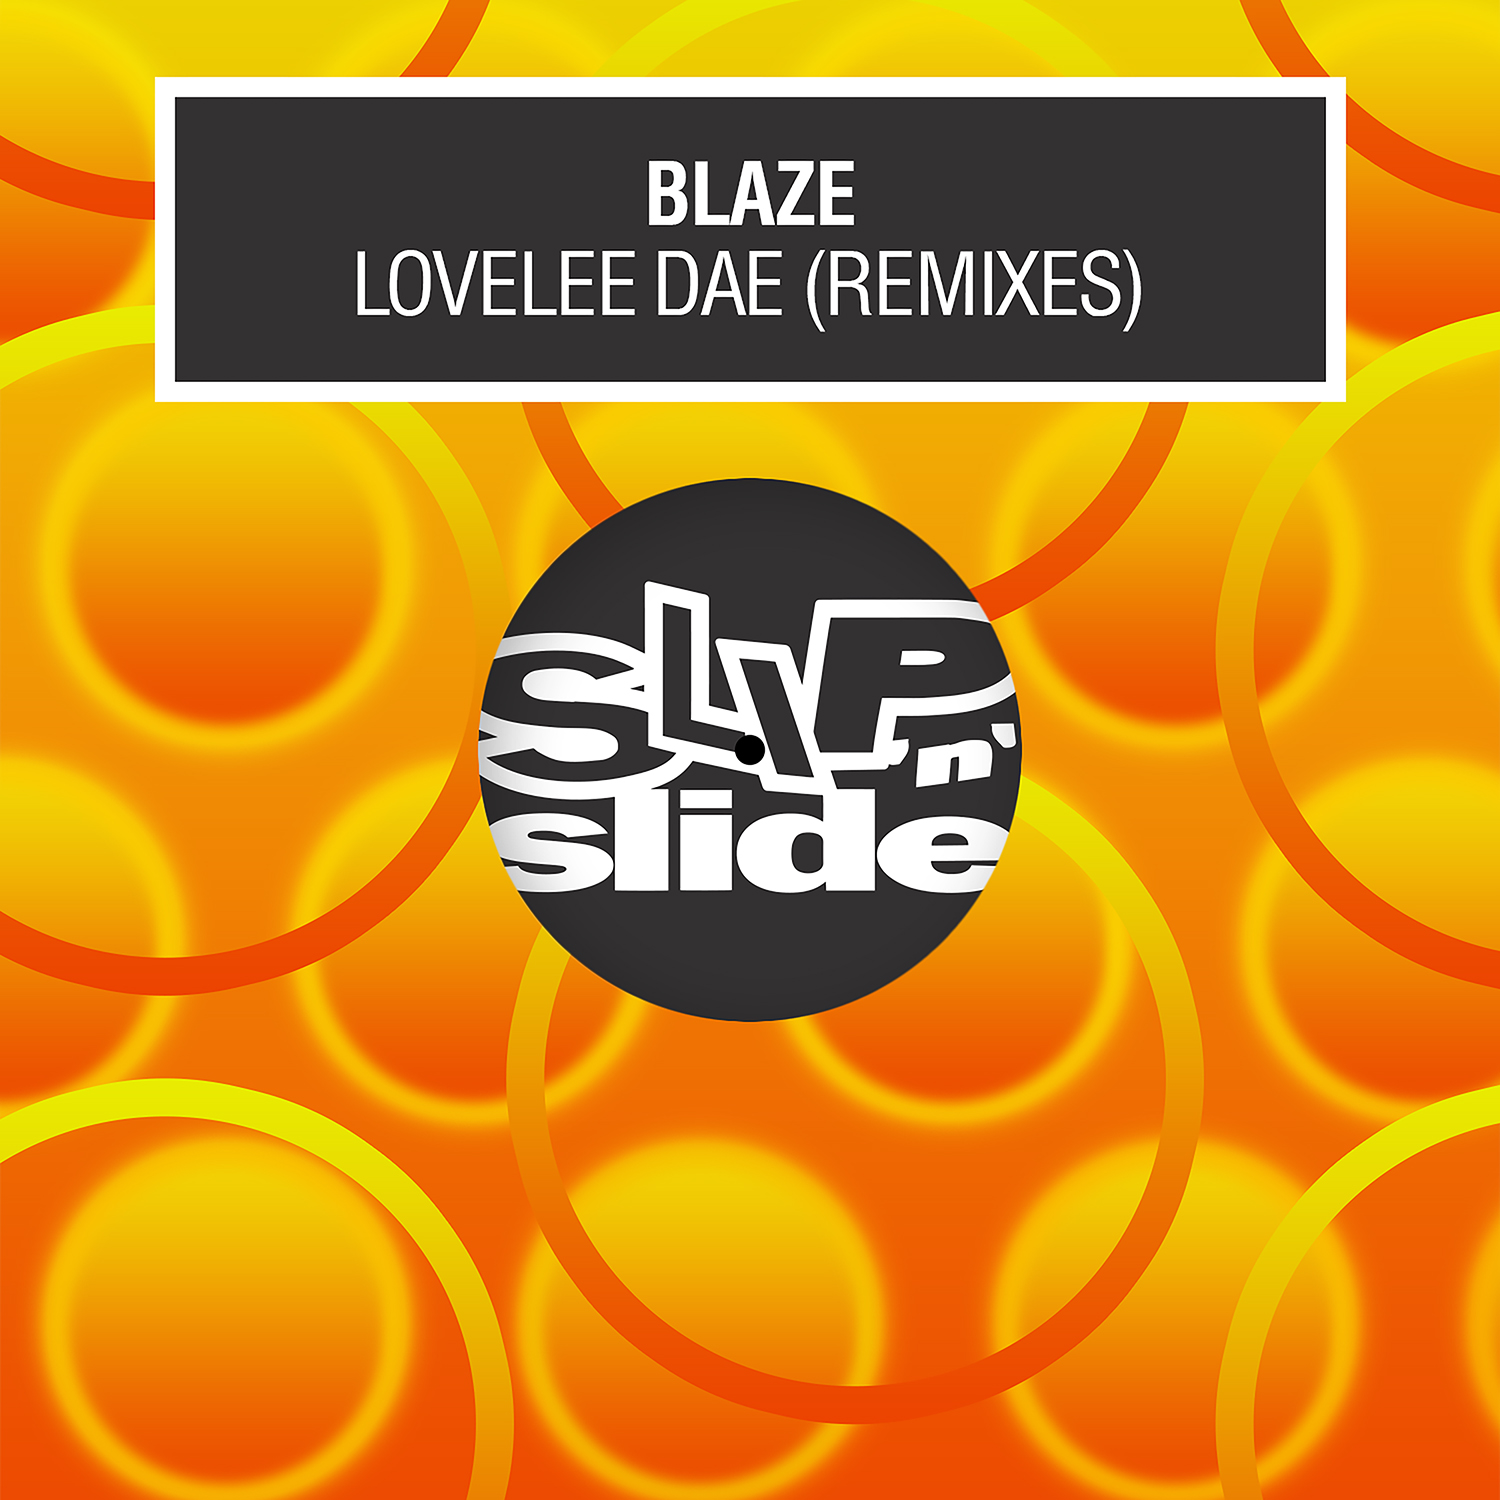 Blaze “Lovelee Dae” Seth Troxler, Franck Roger Remixes